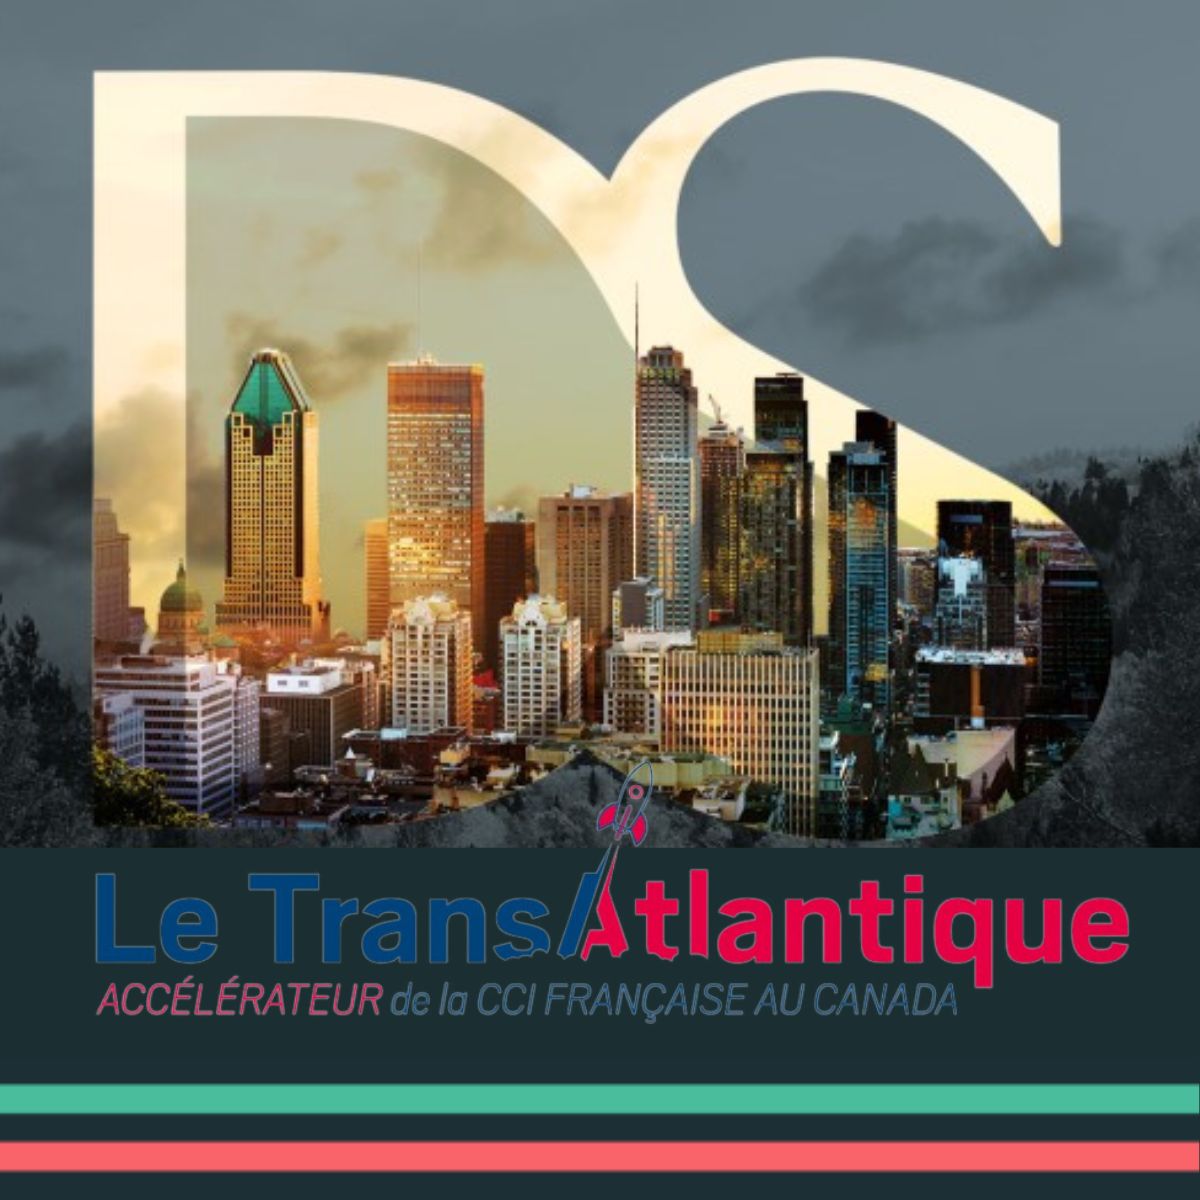 Alexandre Normandin-Lussier takes part in the Le Transatlantique accelerator program